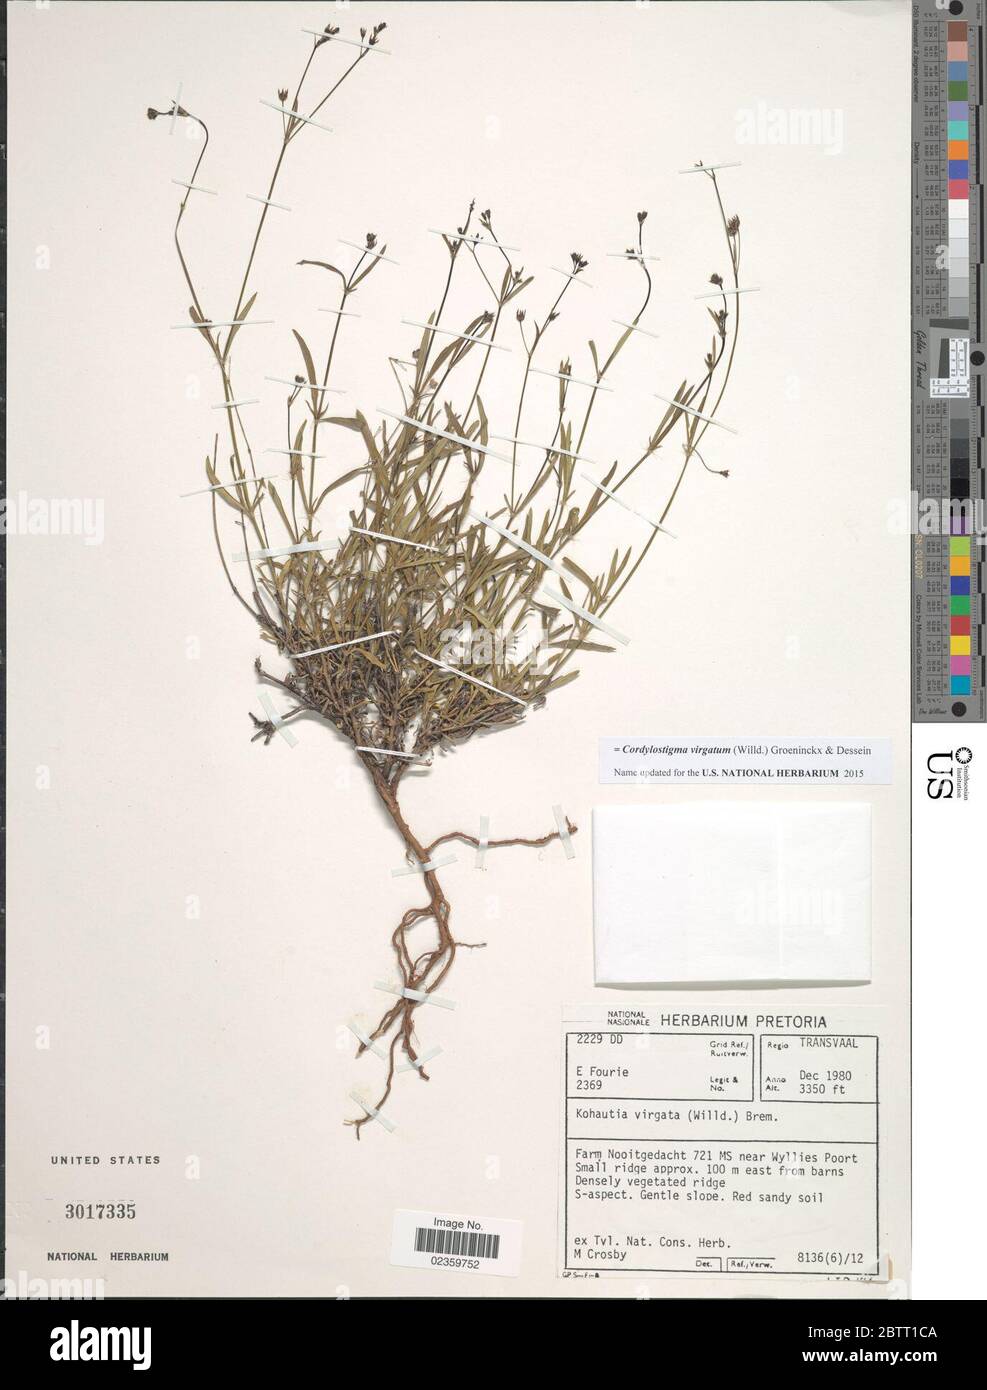 Cordylostigma virgatum Willd Groeninckx Dessein. Stock Photo